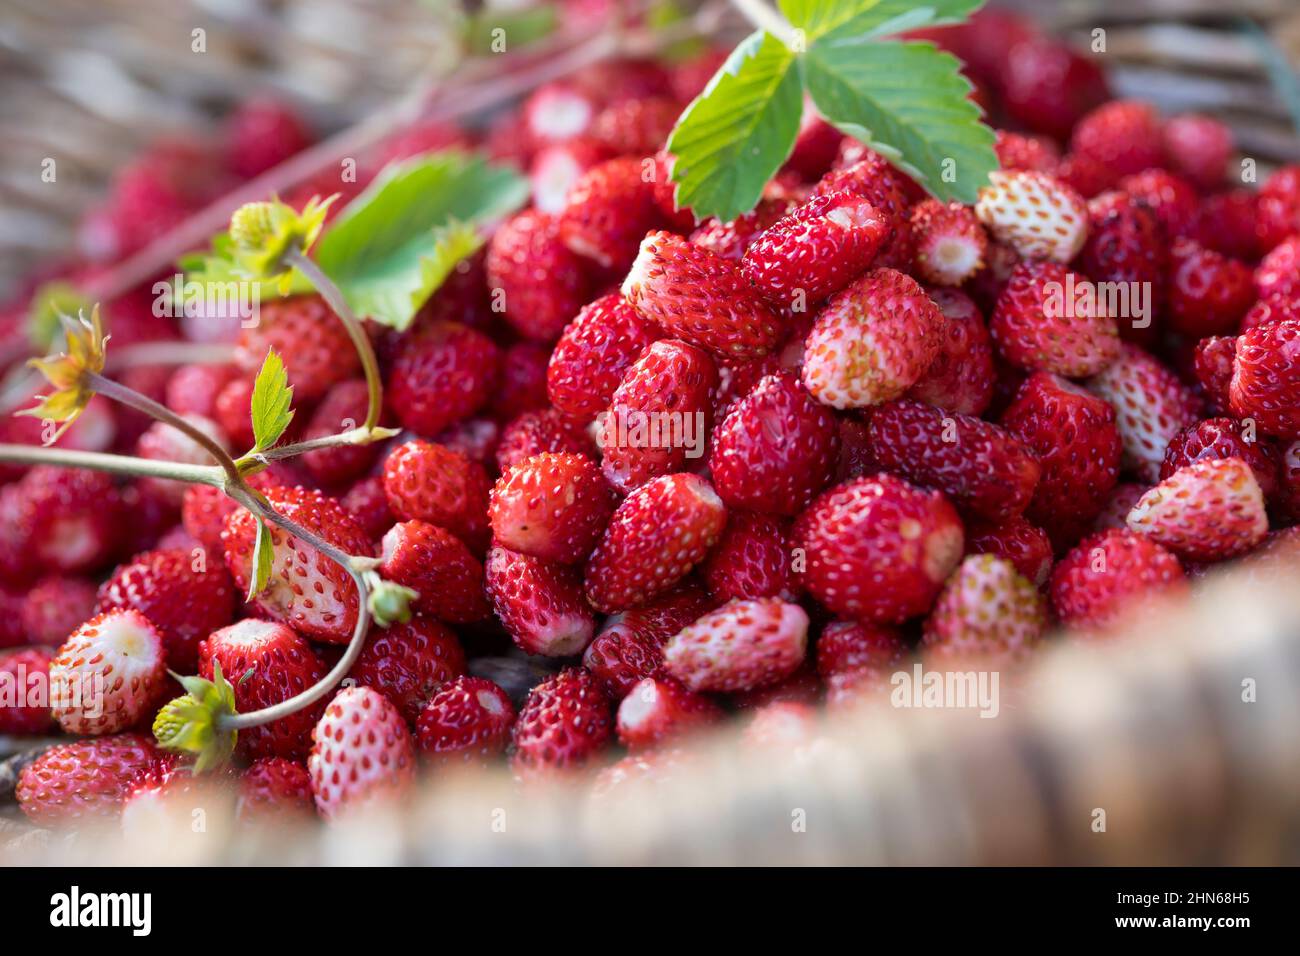 Erdbeeren korb hi-res stock photography and images - Alamy